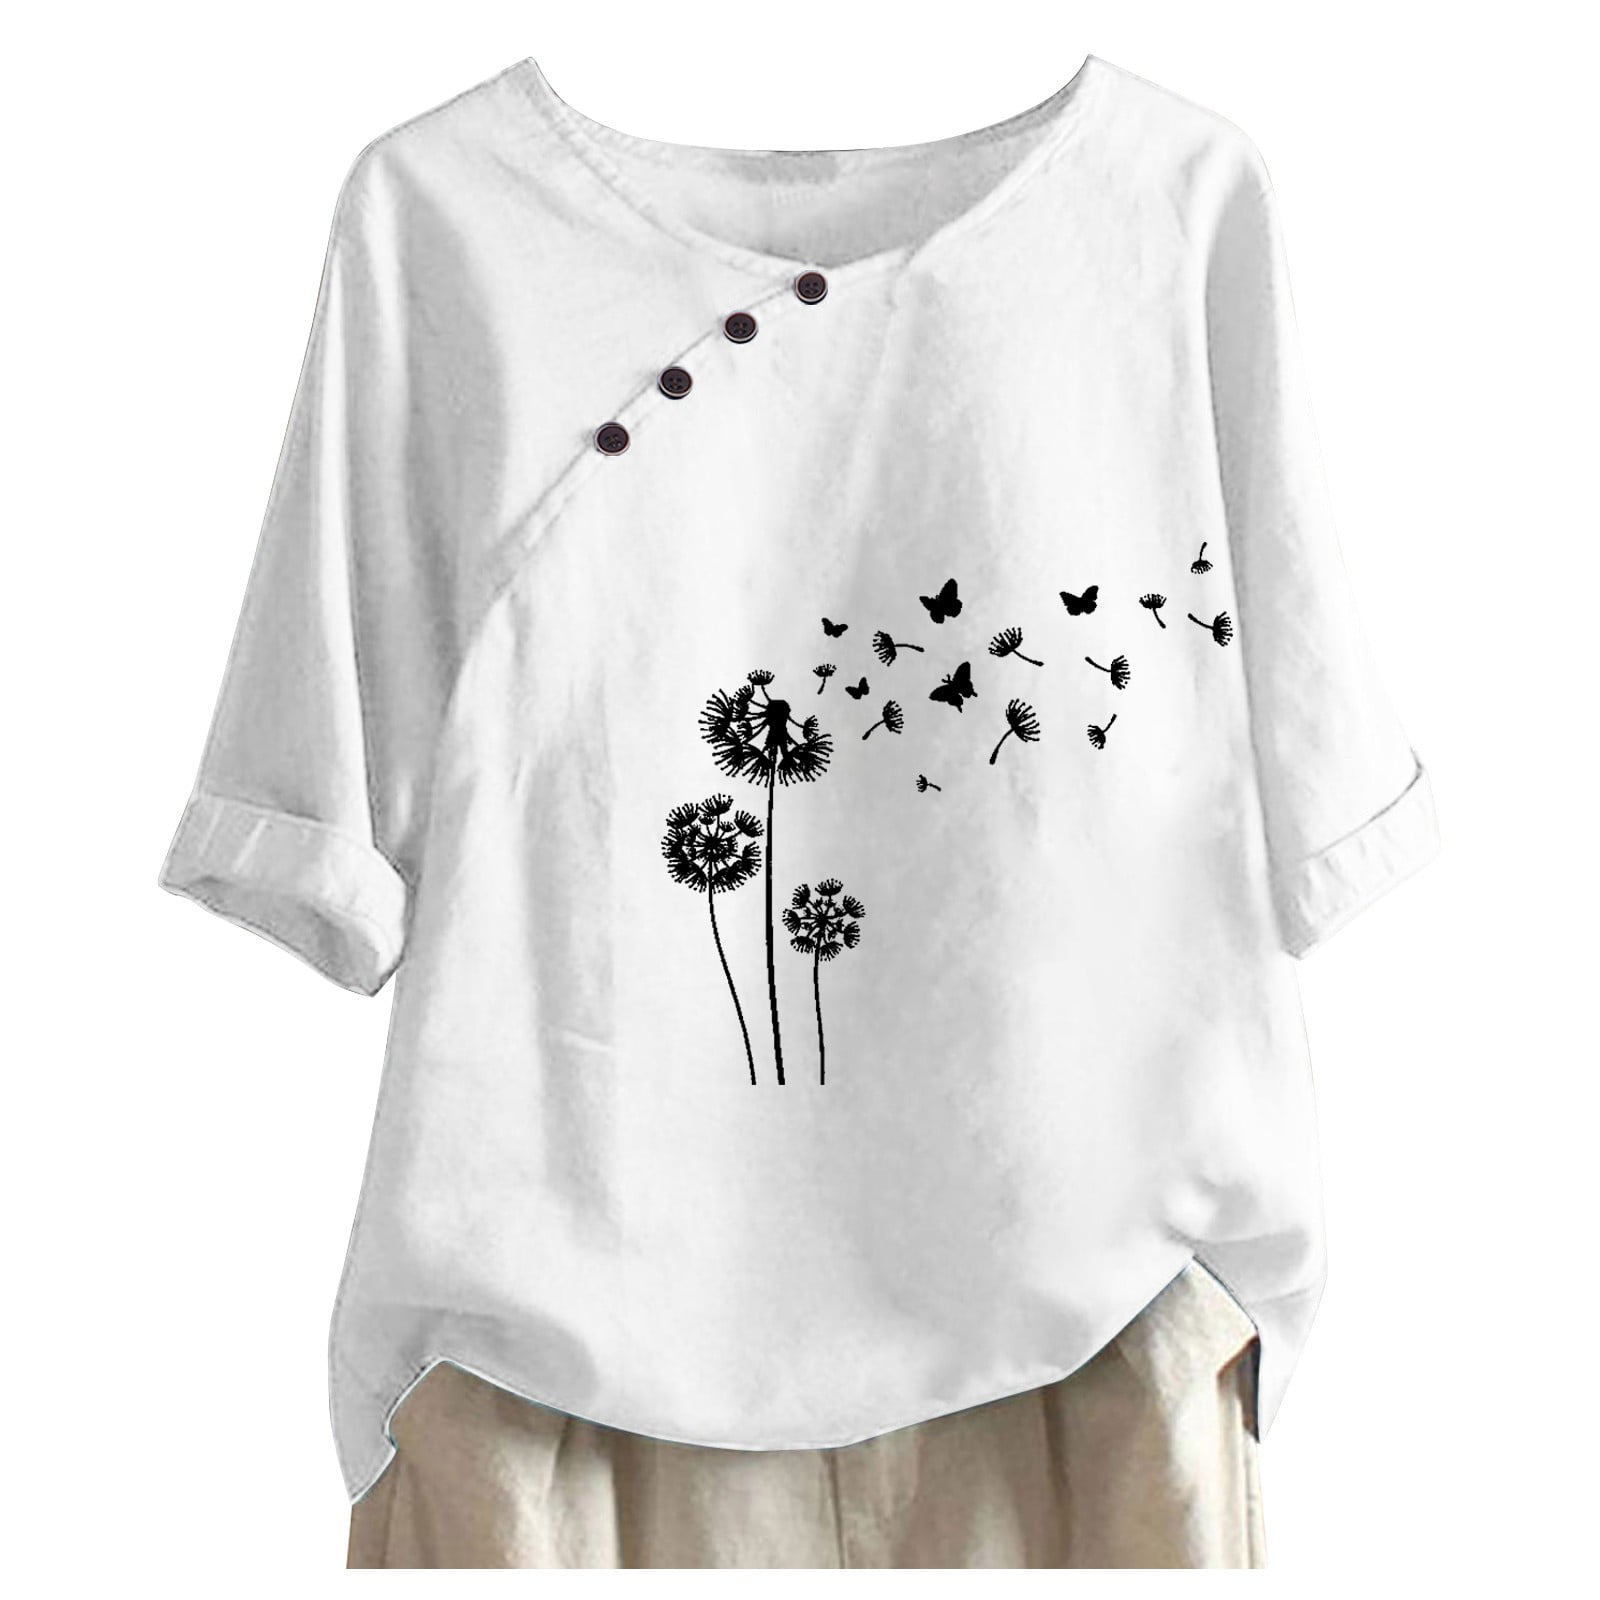 PMUYBHF O Neck T shirts Casual Button Dandelion Pattern Print Short Sleeve  Blouse Tops White-g